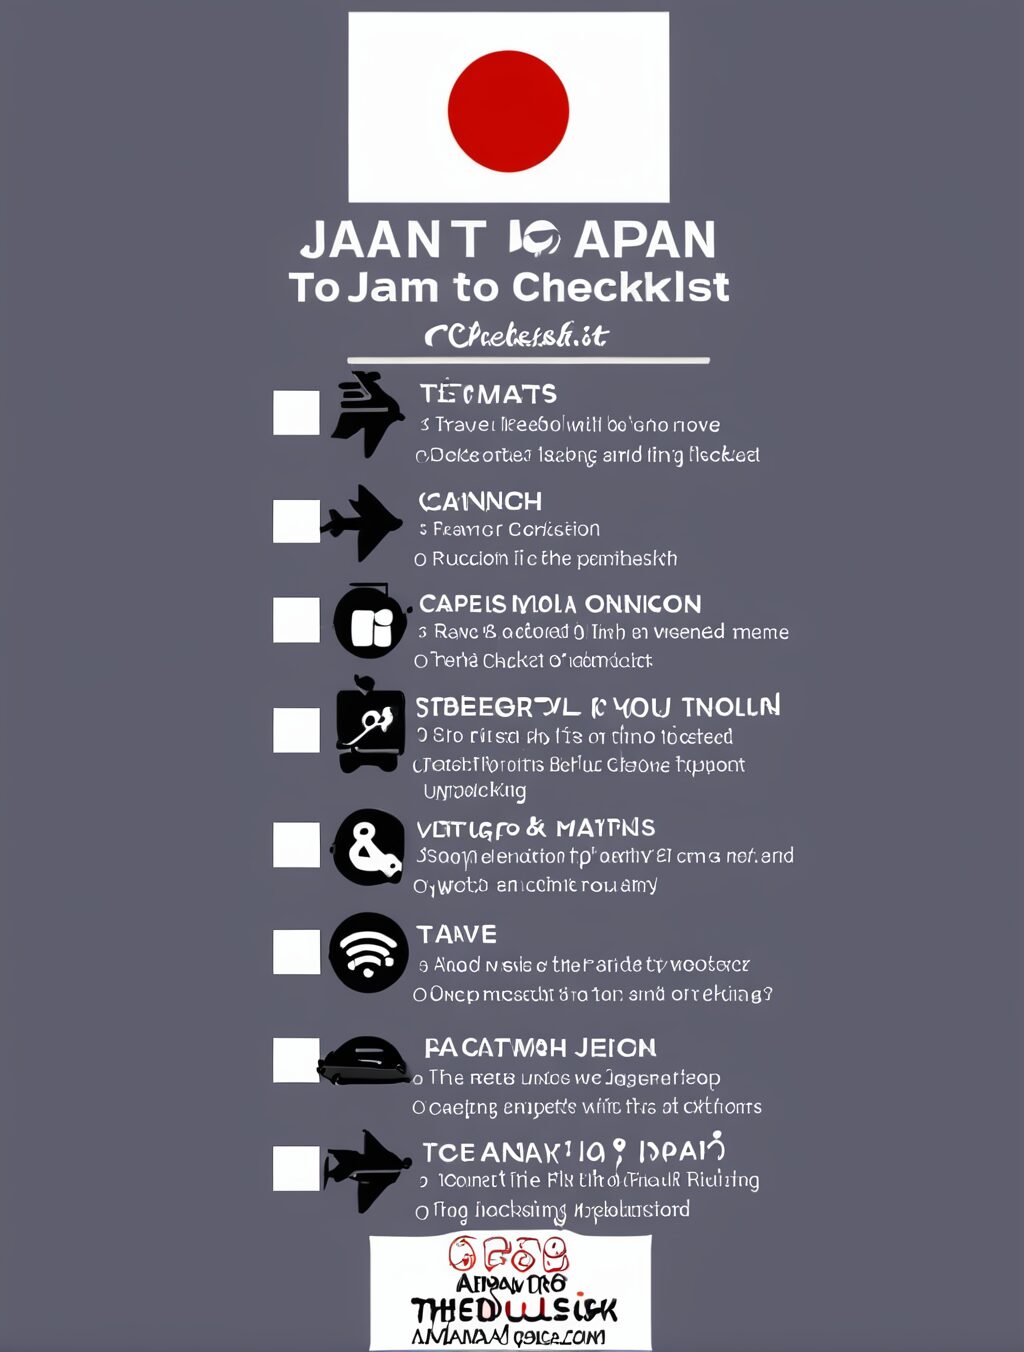 travel to japan checklist reddit